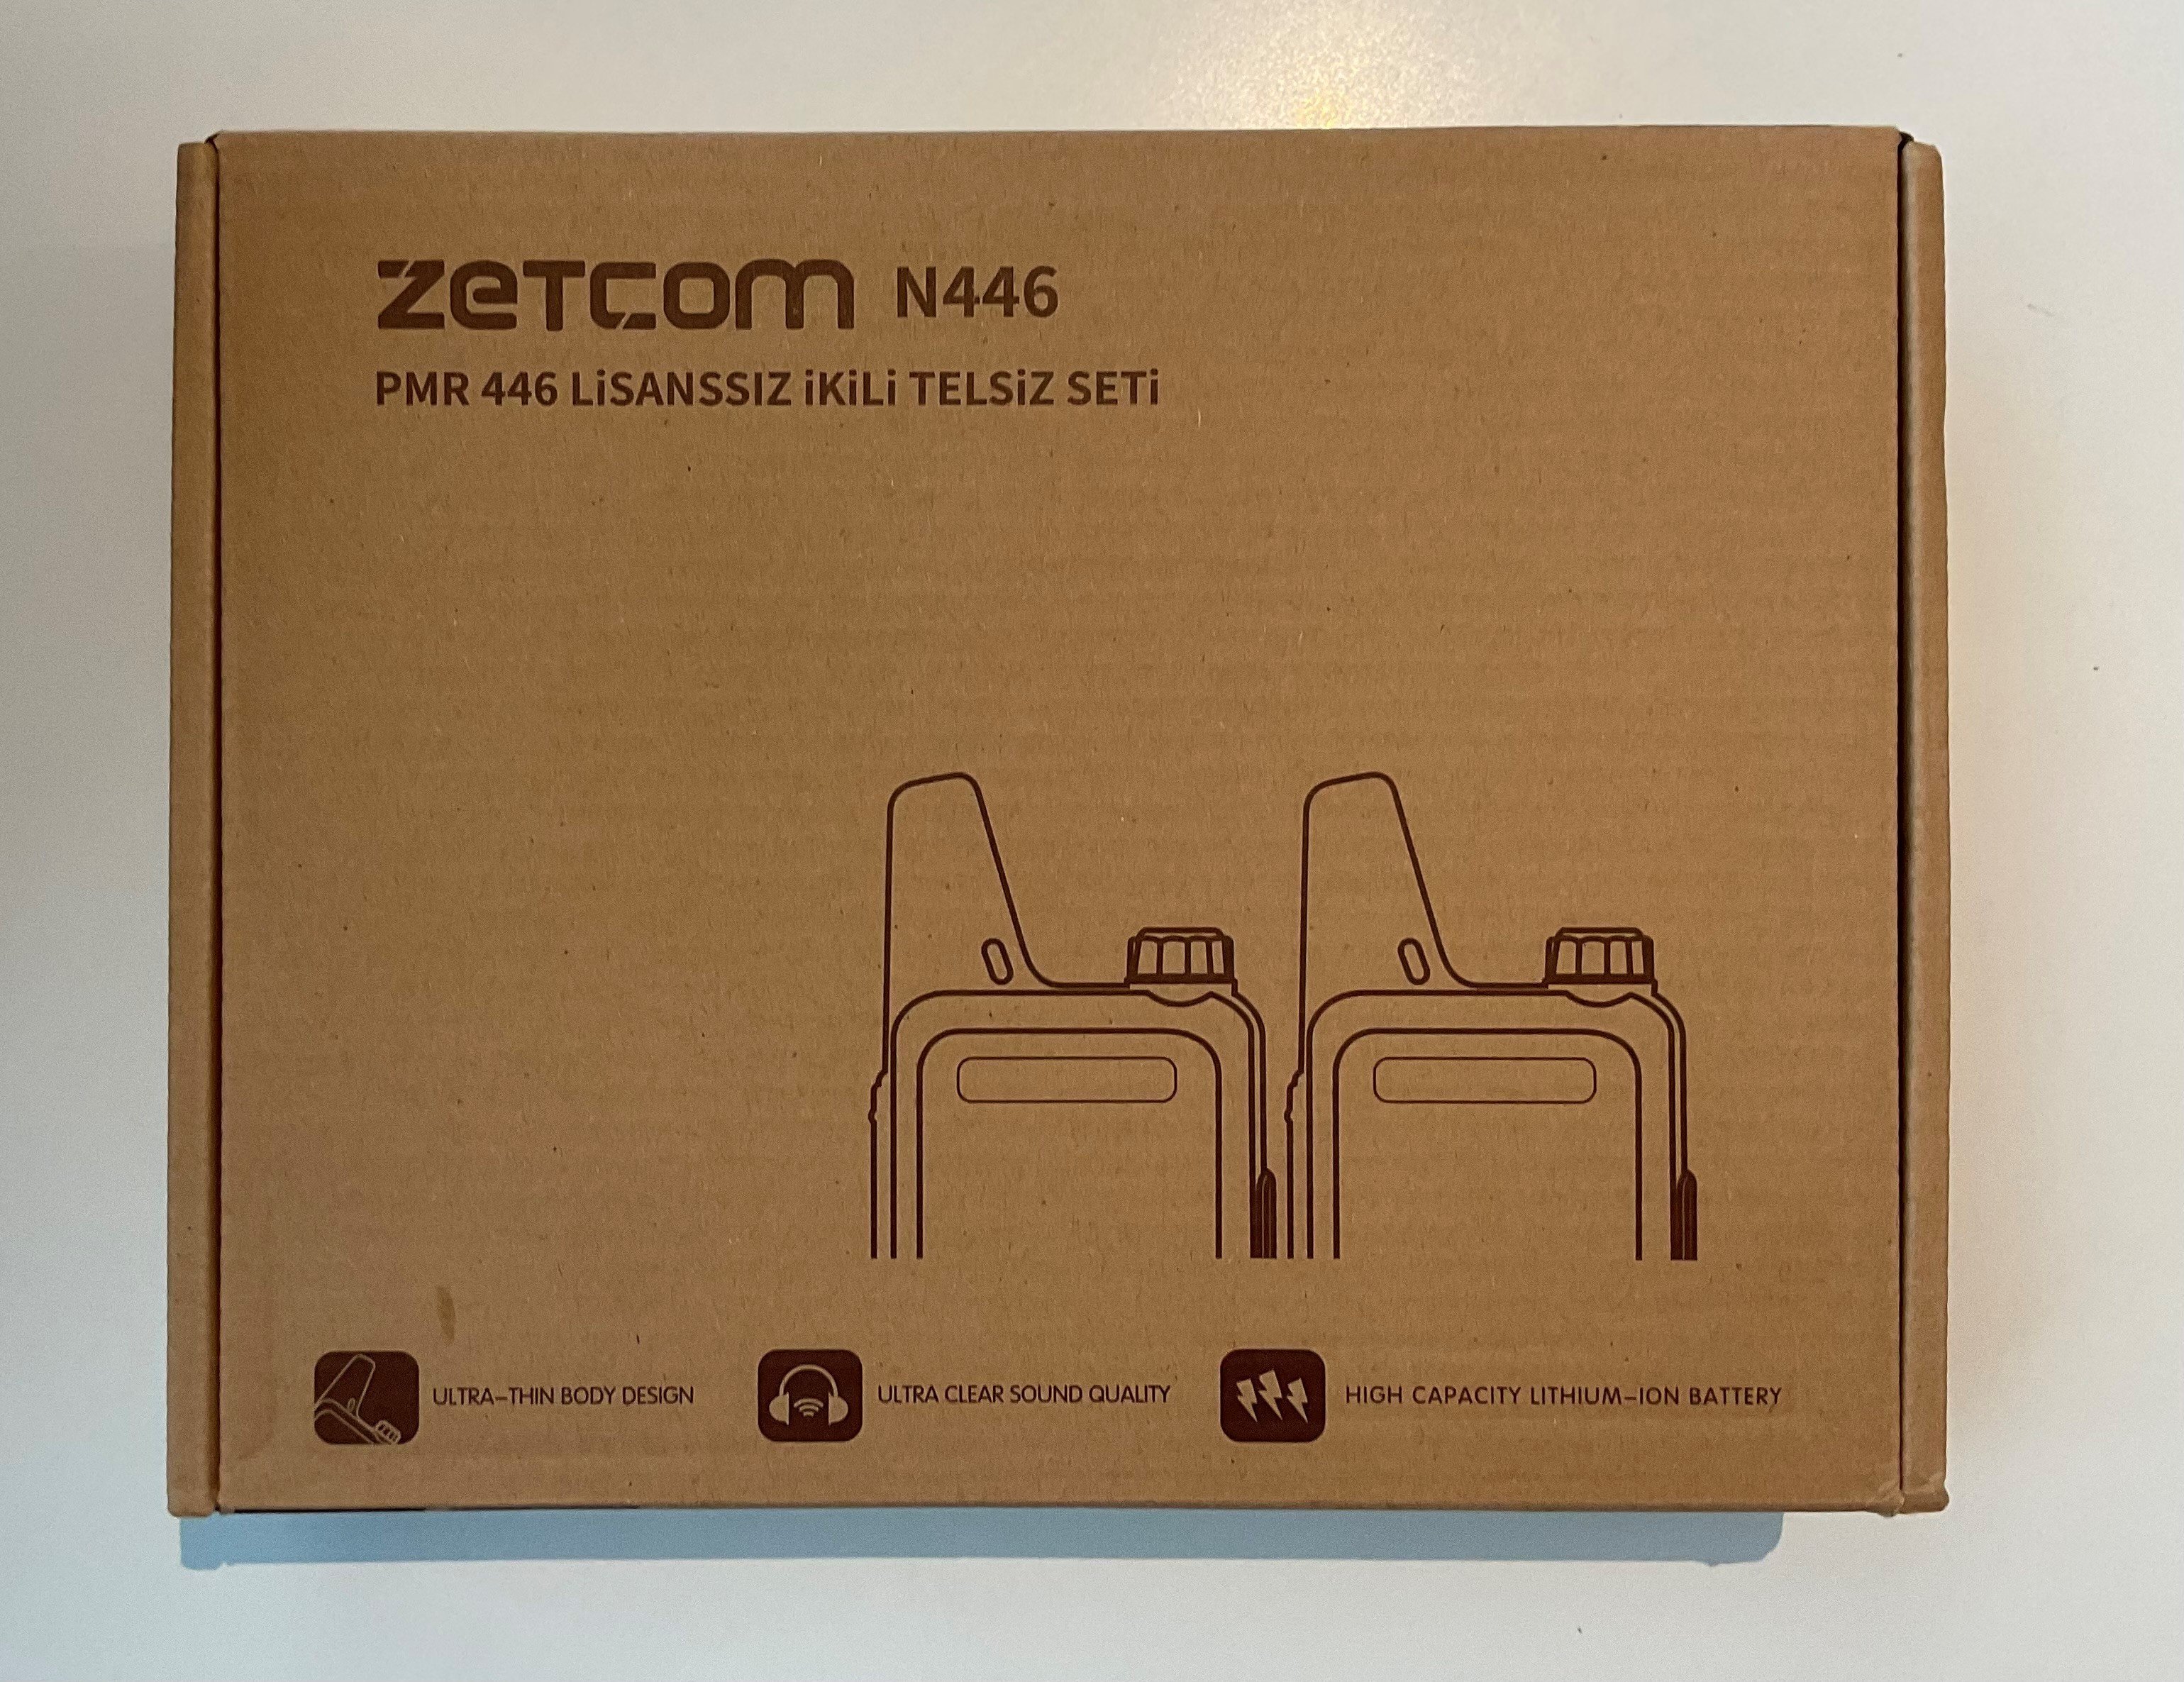 Zetcom N446 PMR Telsiz İkili Set